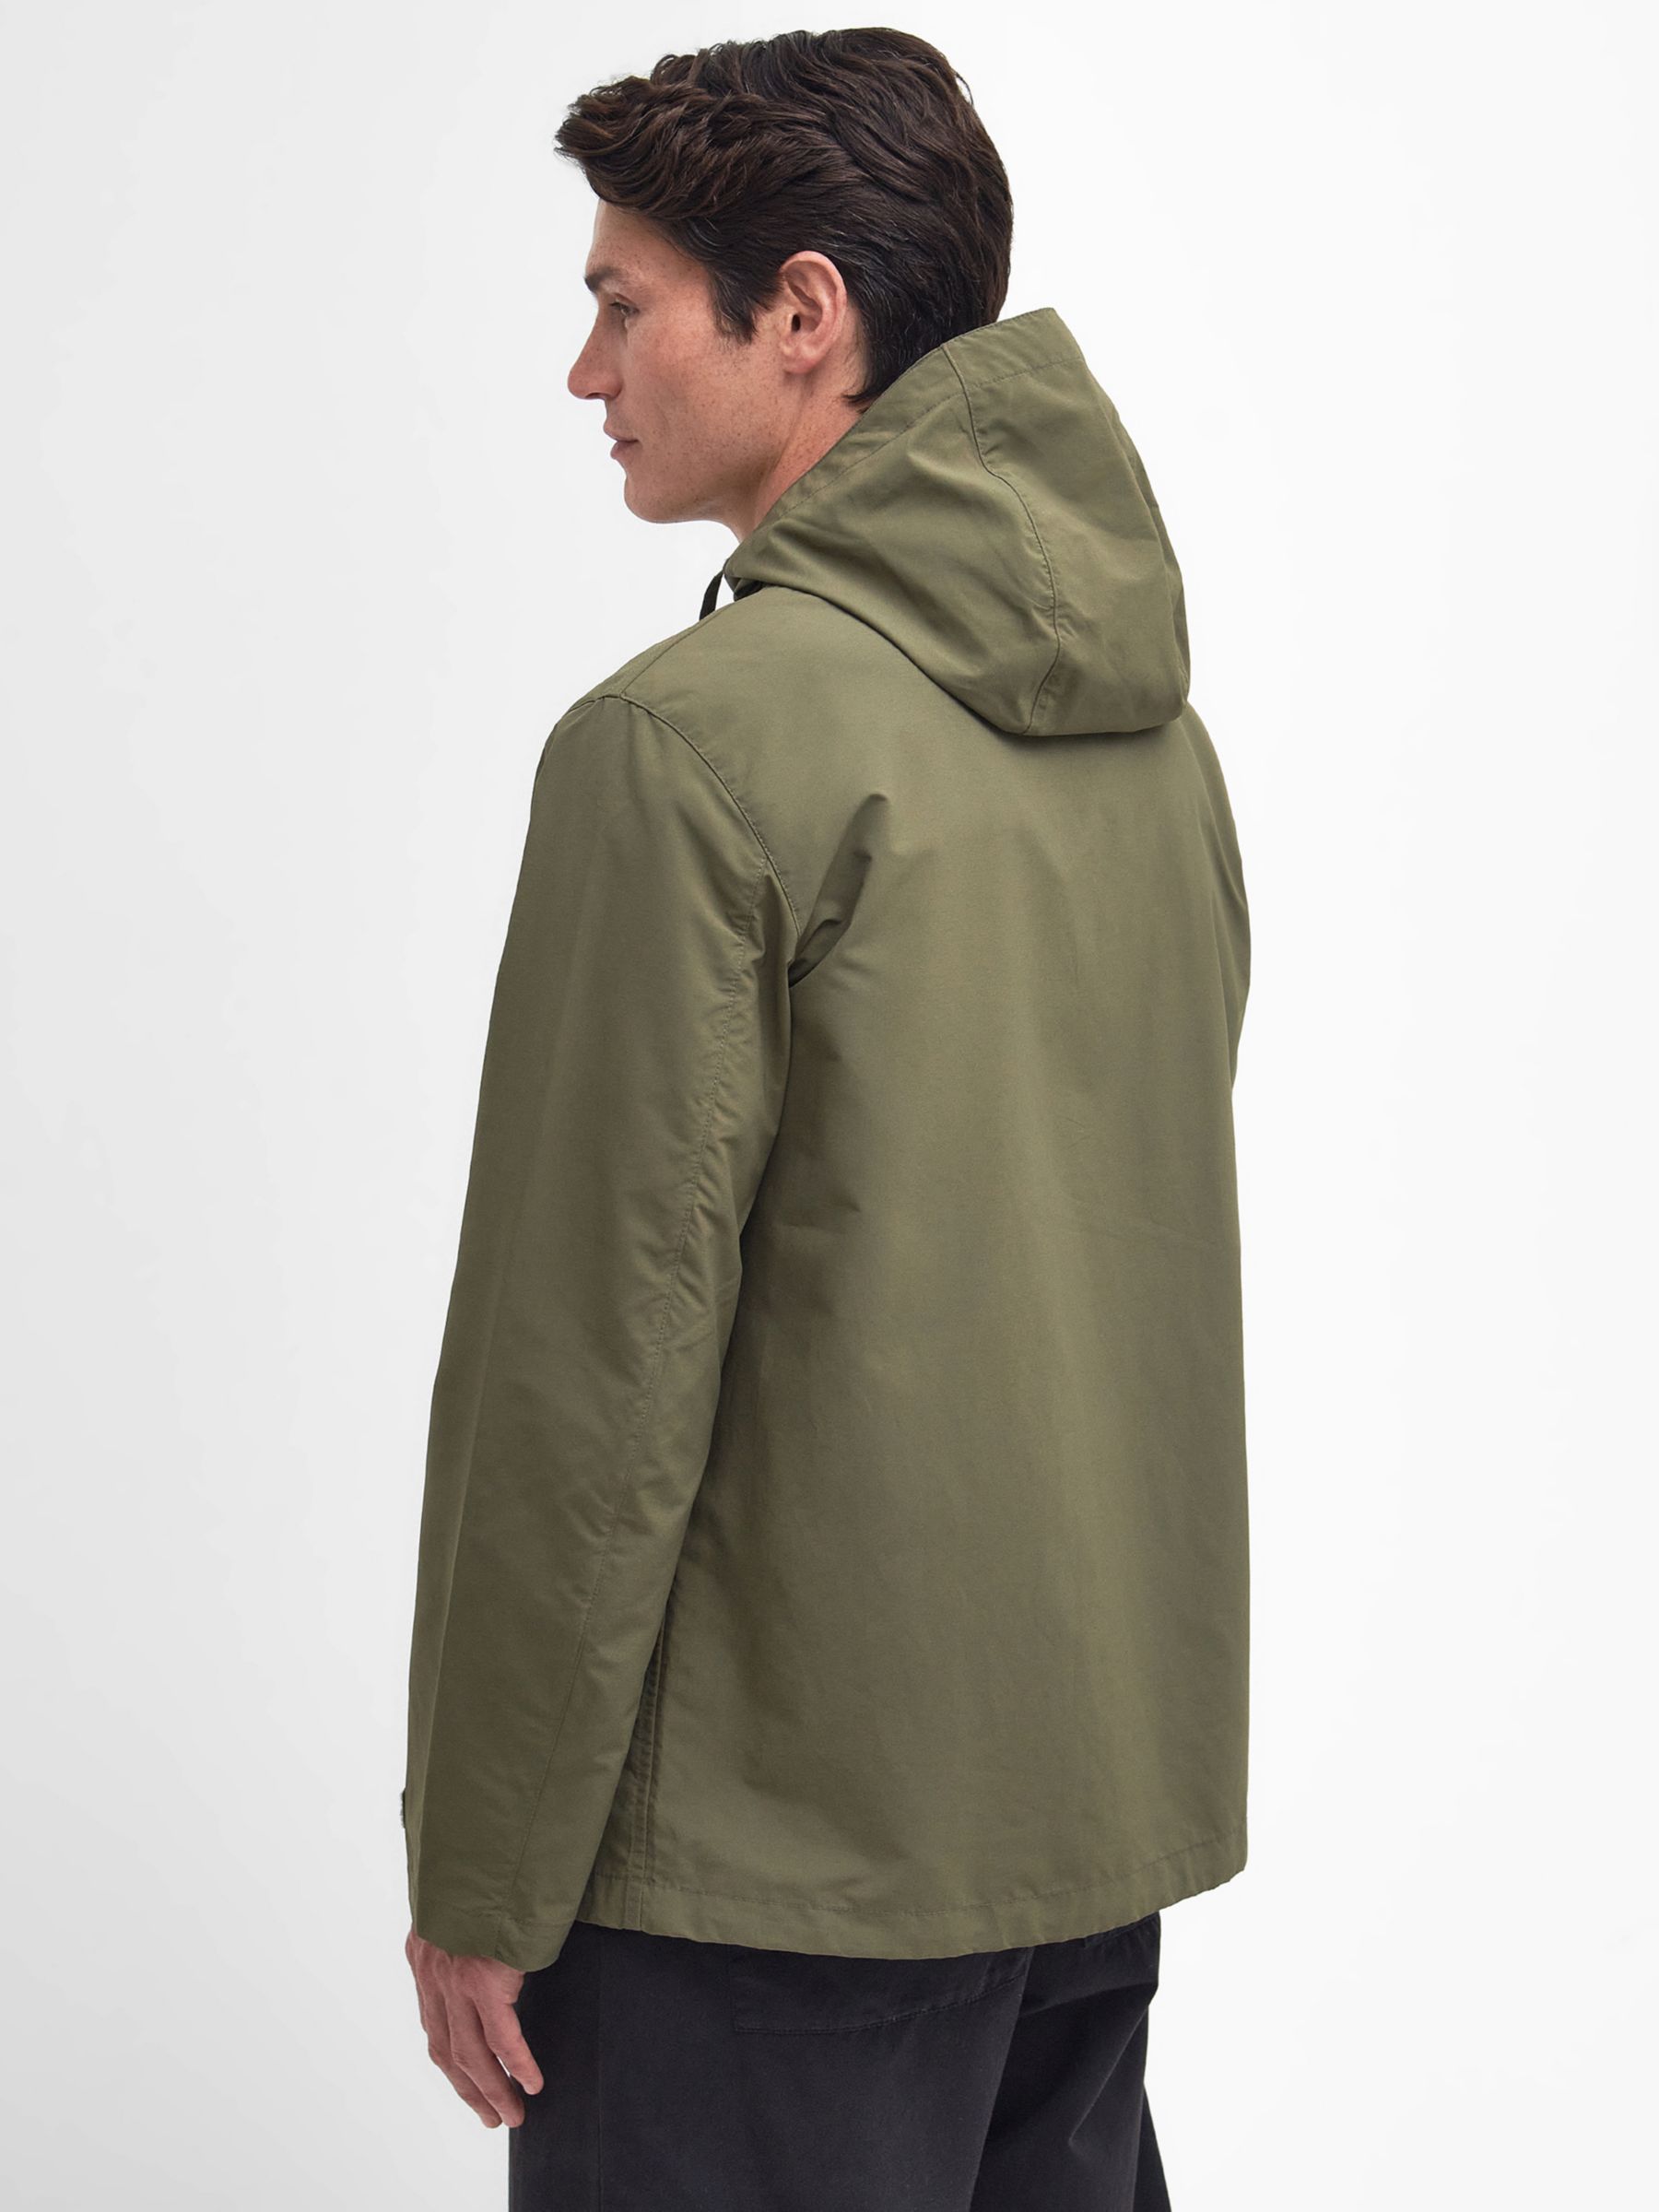 Barbour Quay Lightweight Showerproof Jacket, Pale Sage, XL